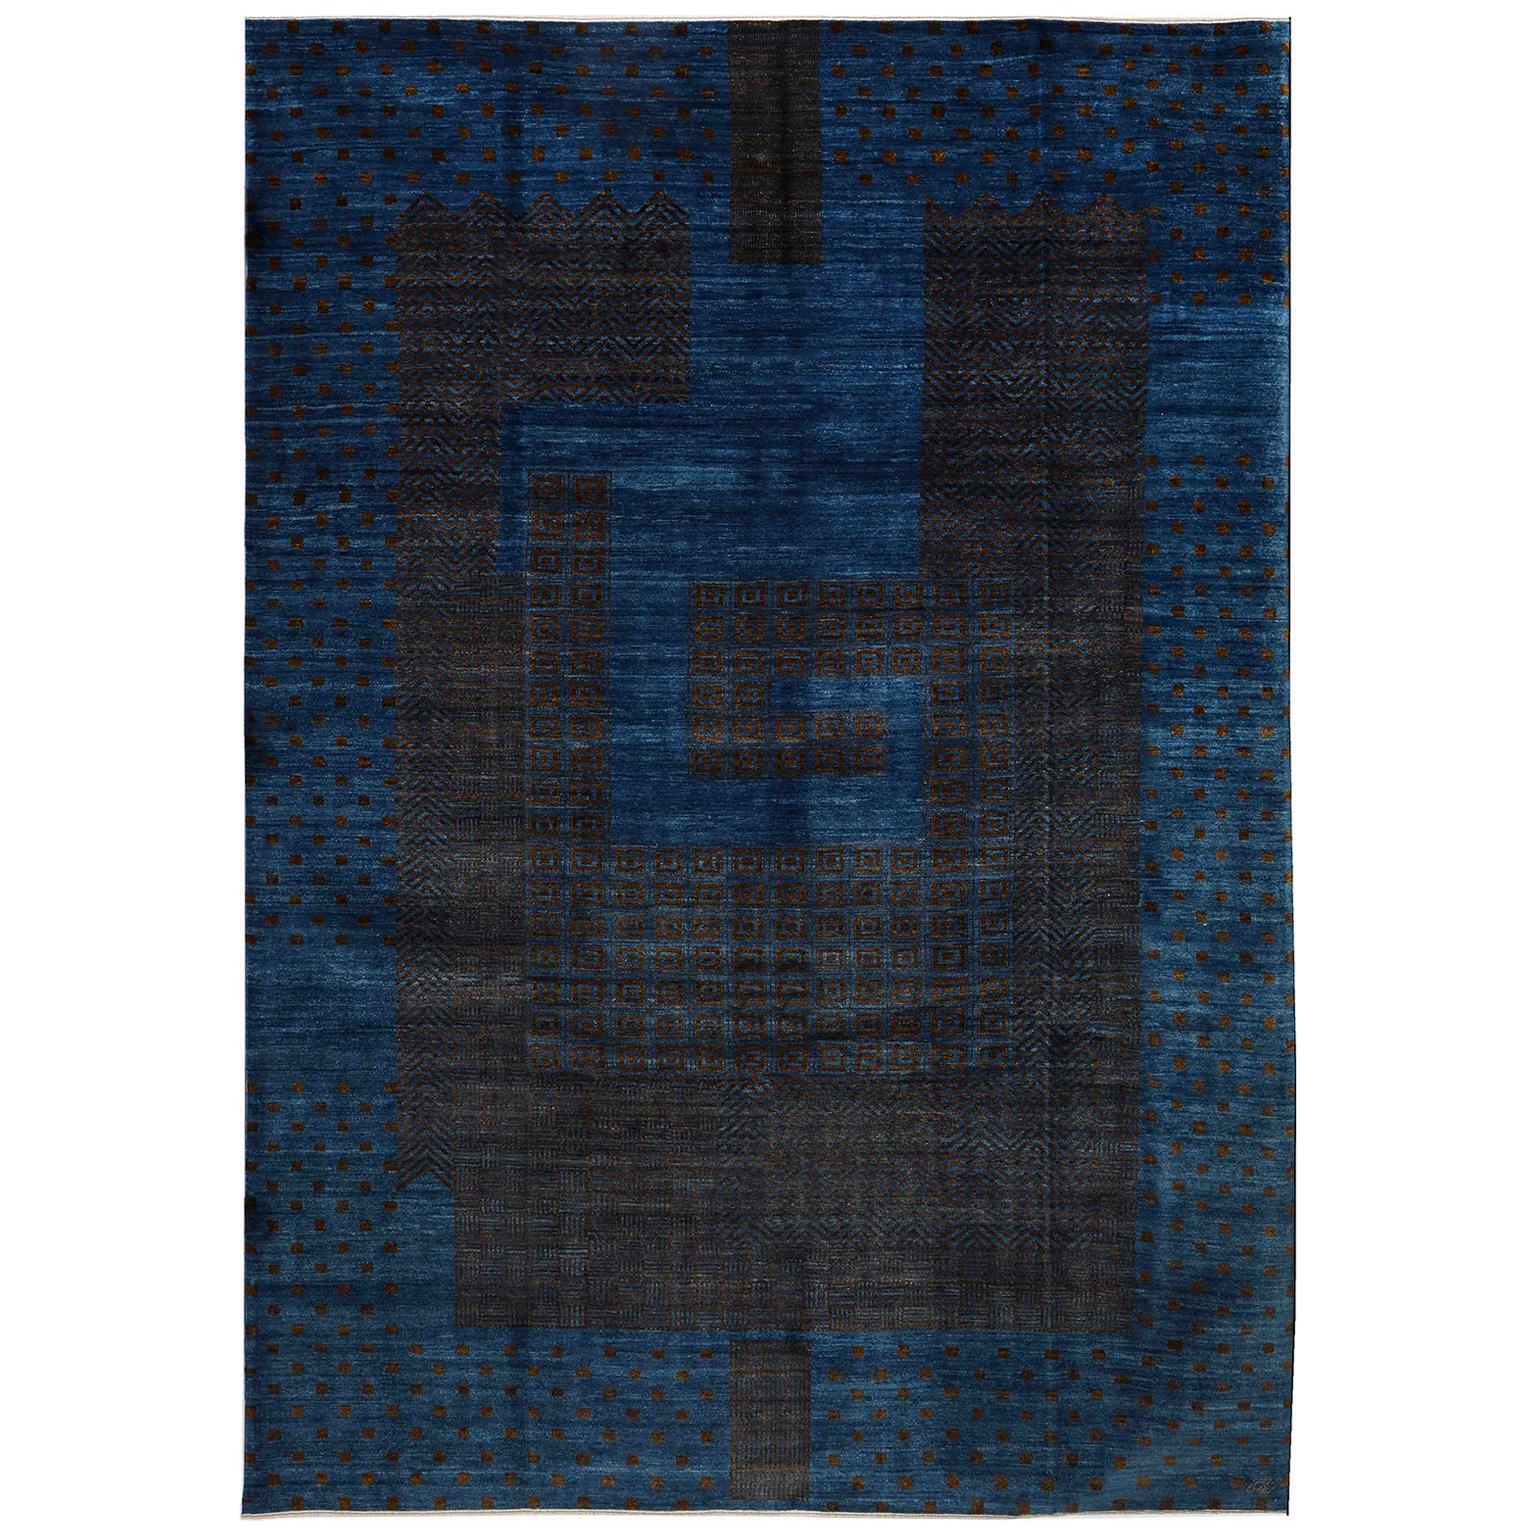 Orley Shabahang Art Deco Wool Persian Rug, Blue and Brown, 9' x 12'